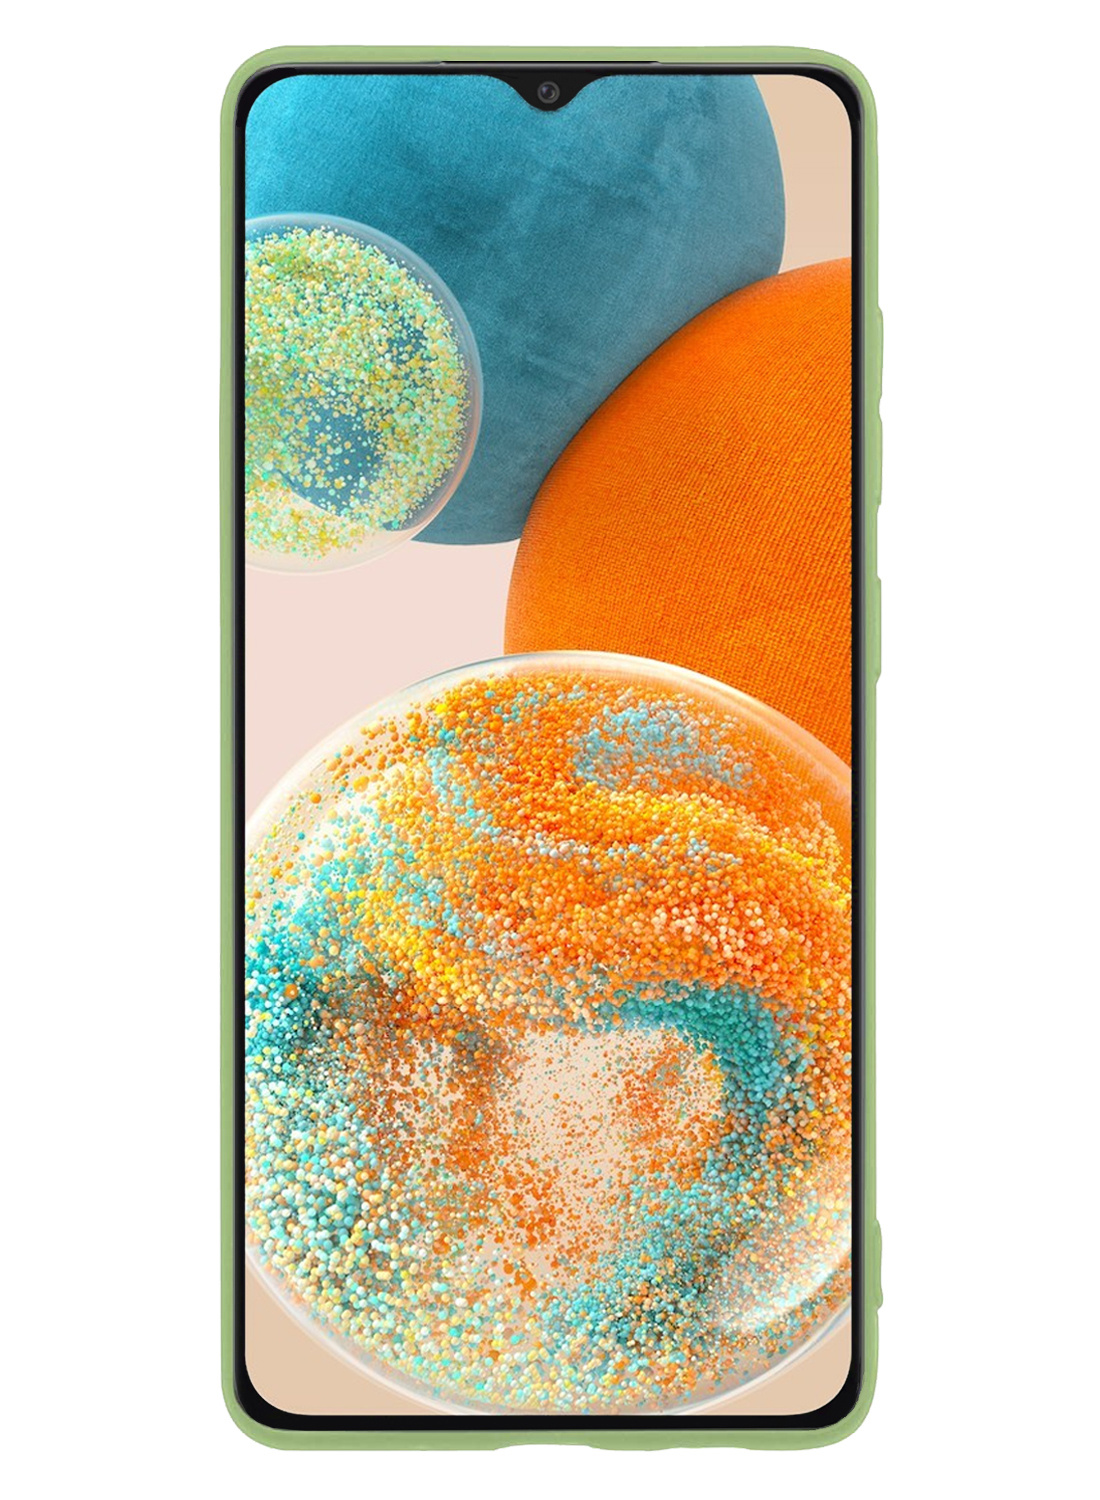 Nomfy Hoesje Geschikt voor Samsung A23 Hoesje Siliconen Cover Case - Hoes Geschikt voor Samsung Galaxy A23 Hoes Back Case - 2-PACK - Groen